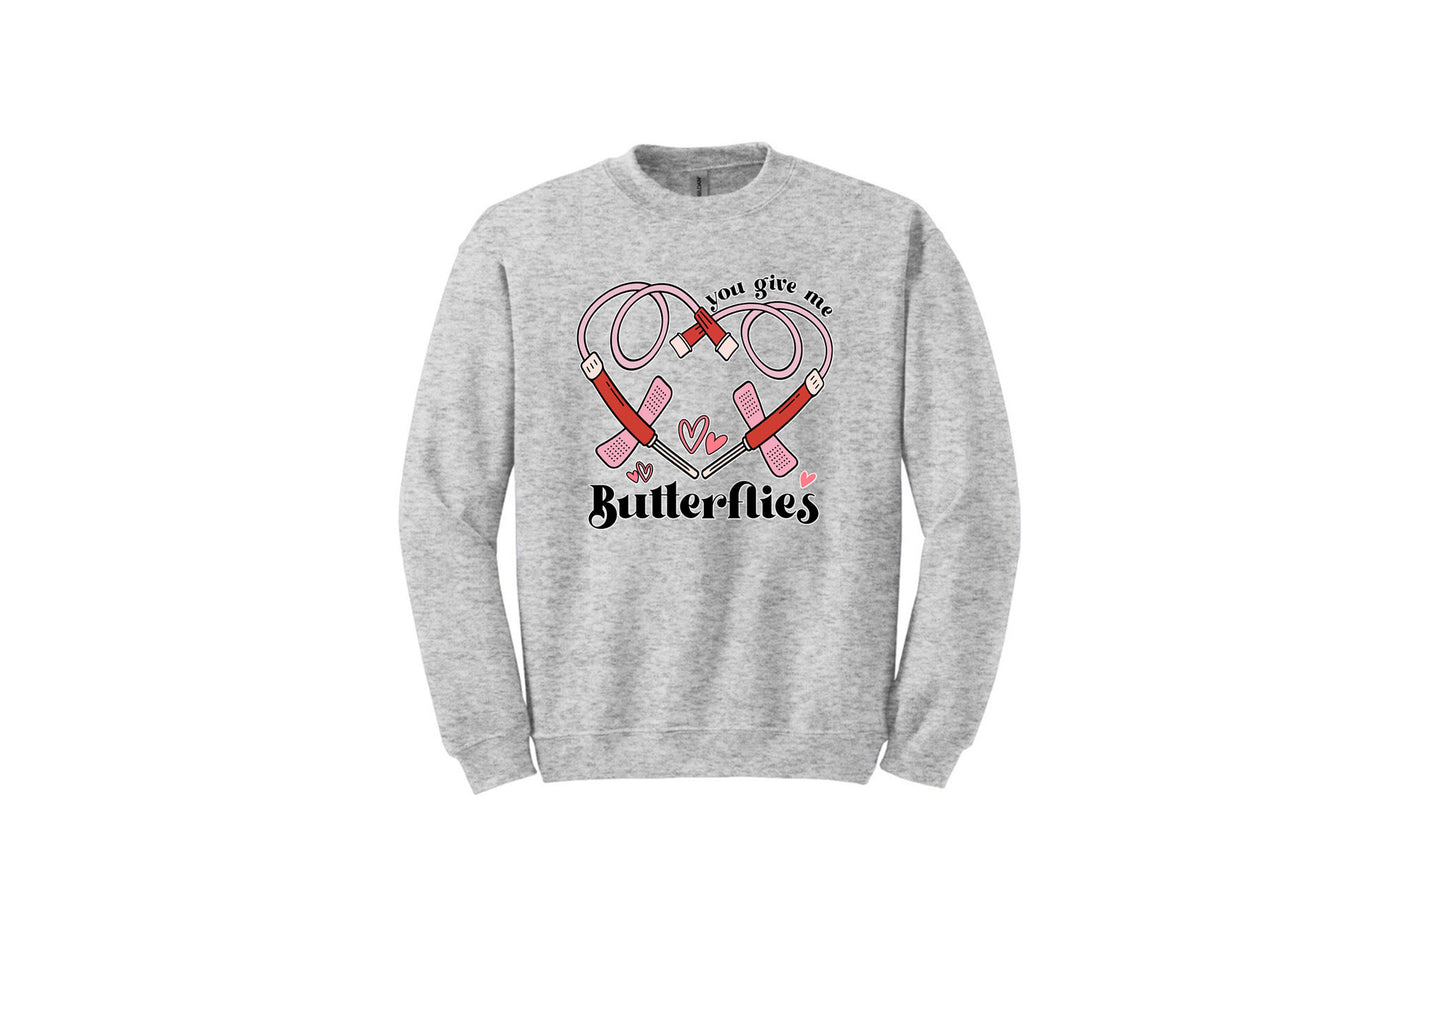 Butterflies Unisex Shirts or Crew